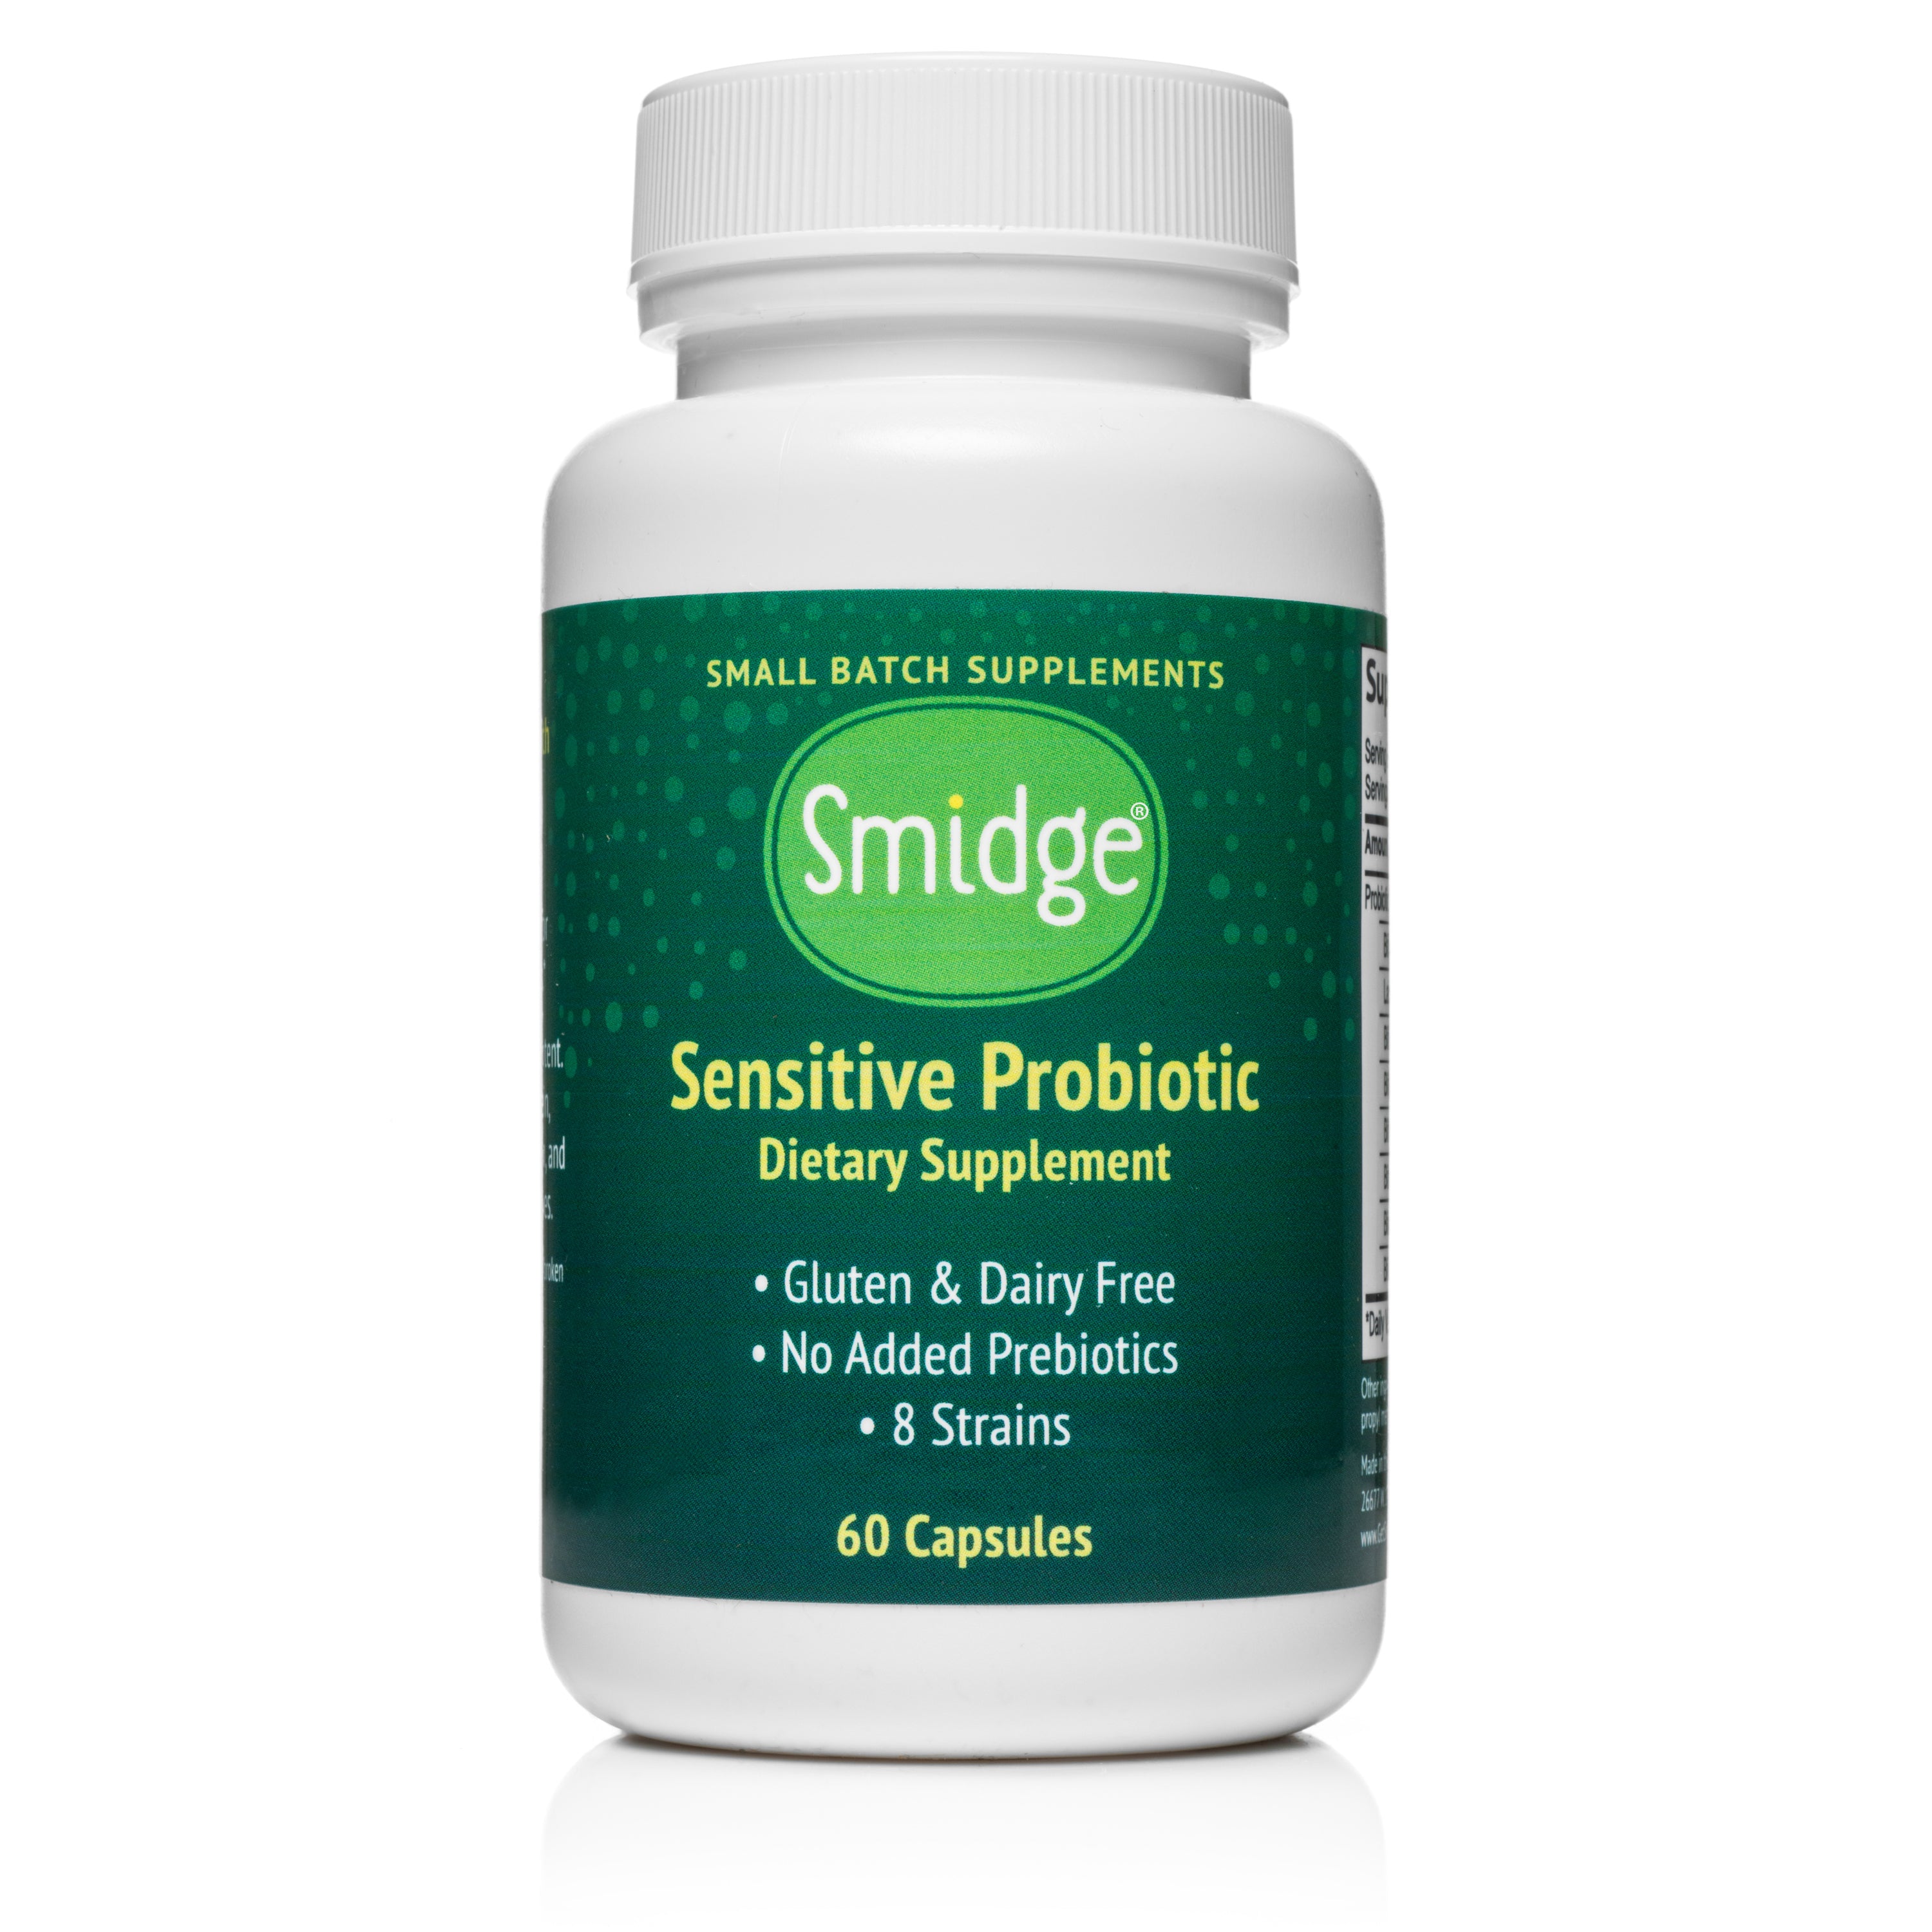 Smidge® Sensitive Probiotic Capsules front label